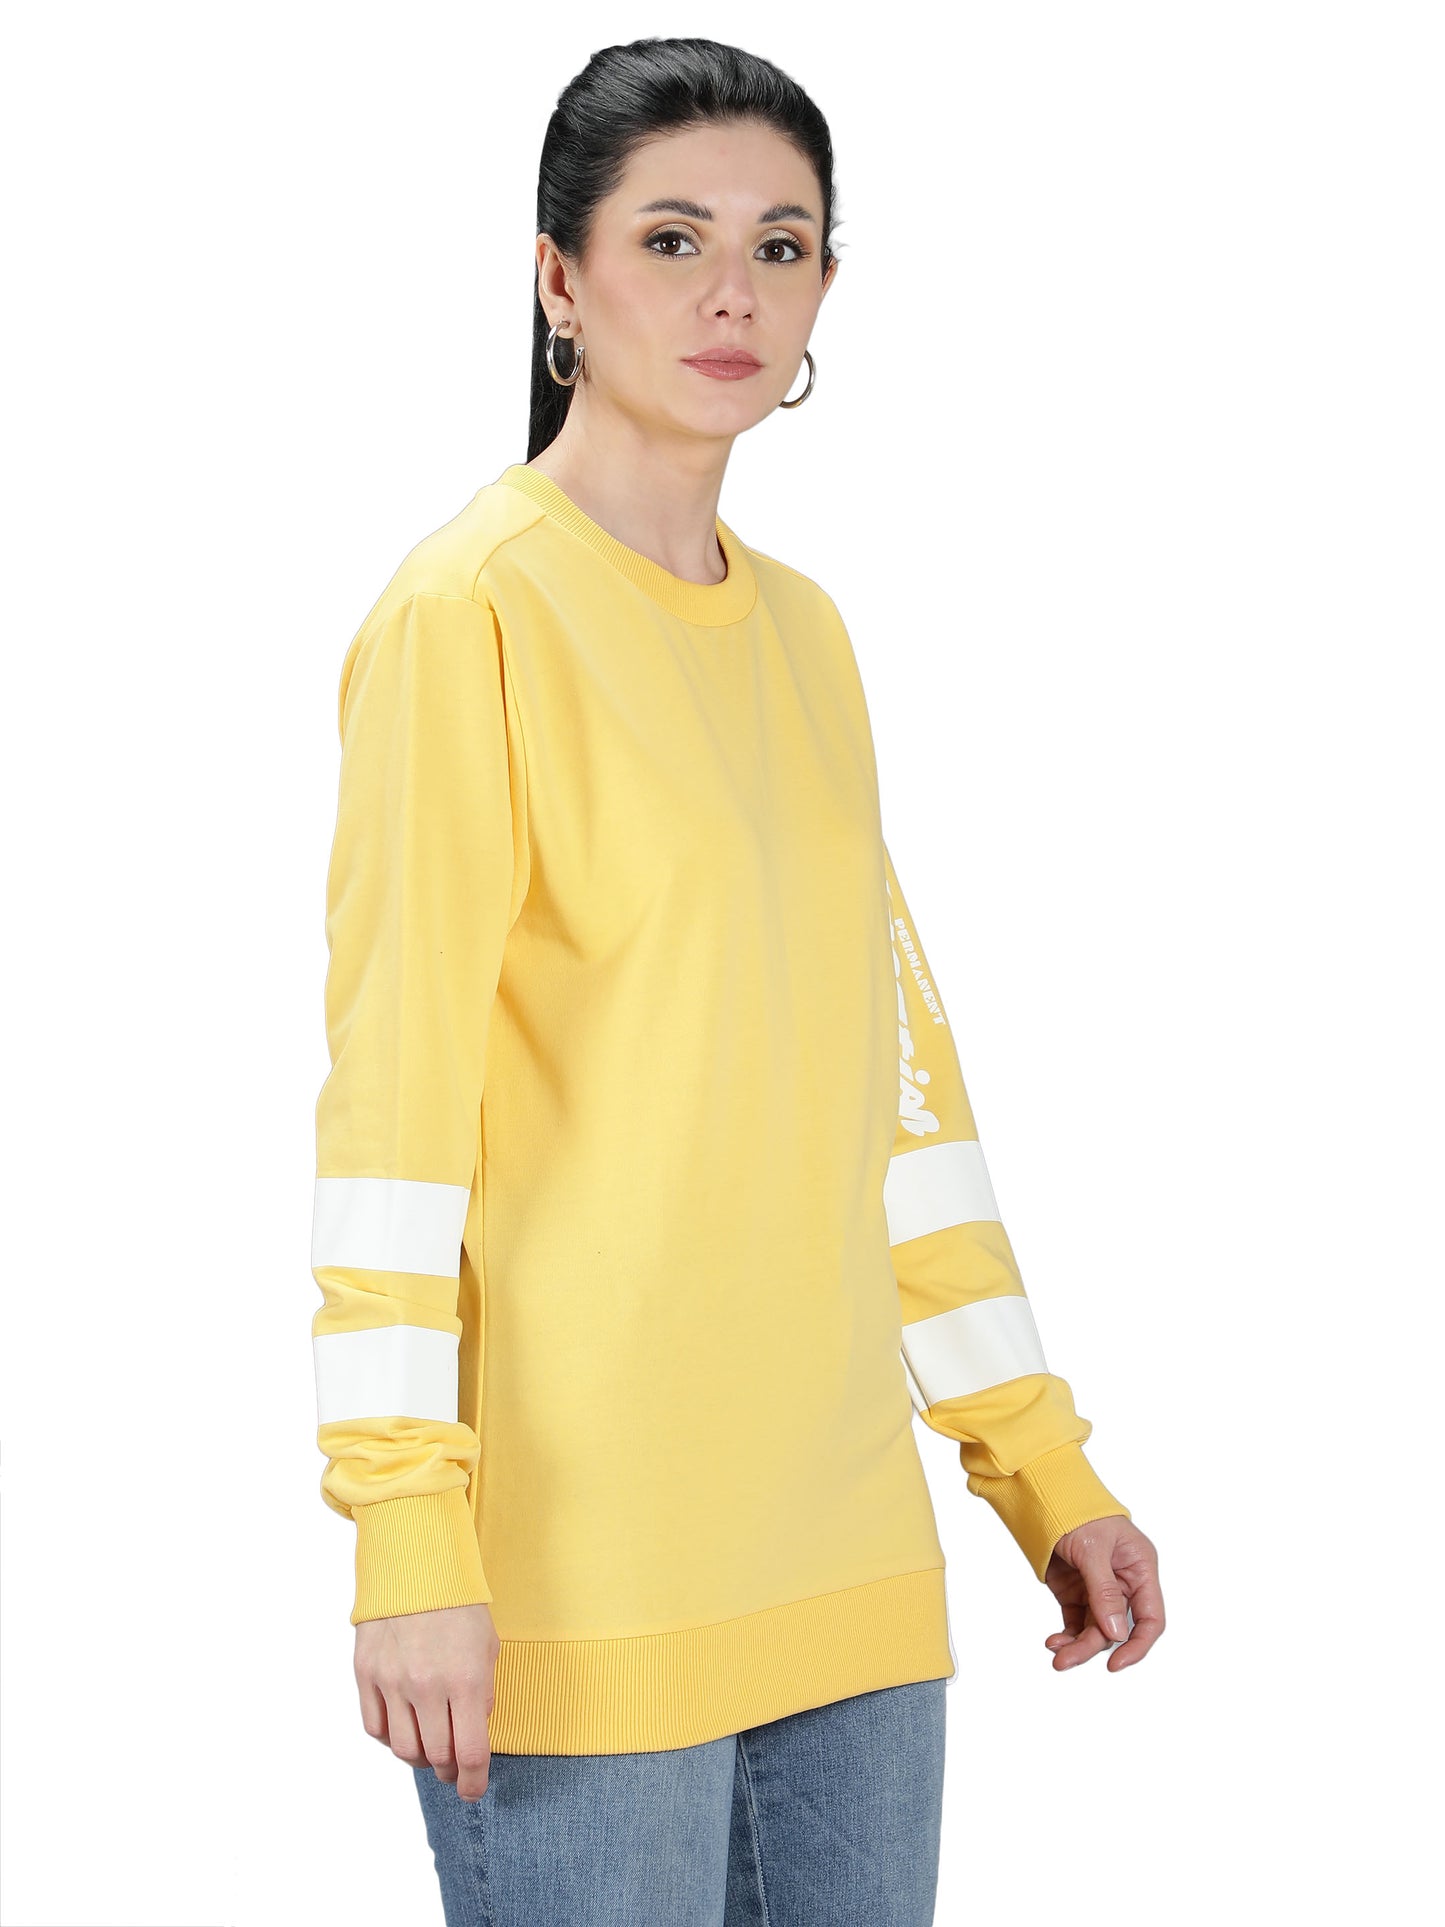 NUEVOSDAMAS Stripes Printed Yellow Sweatshirt